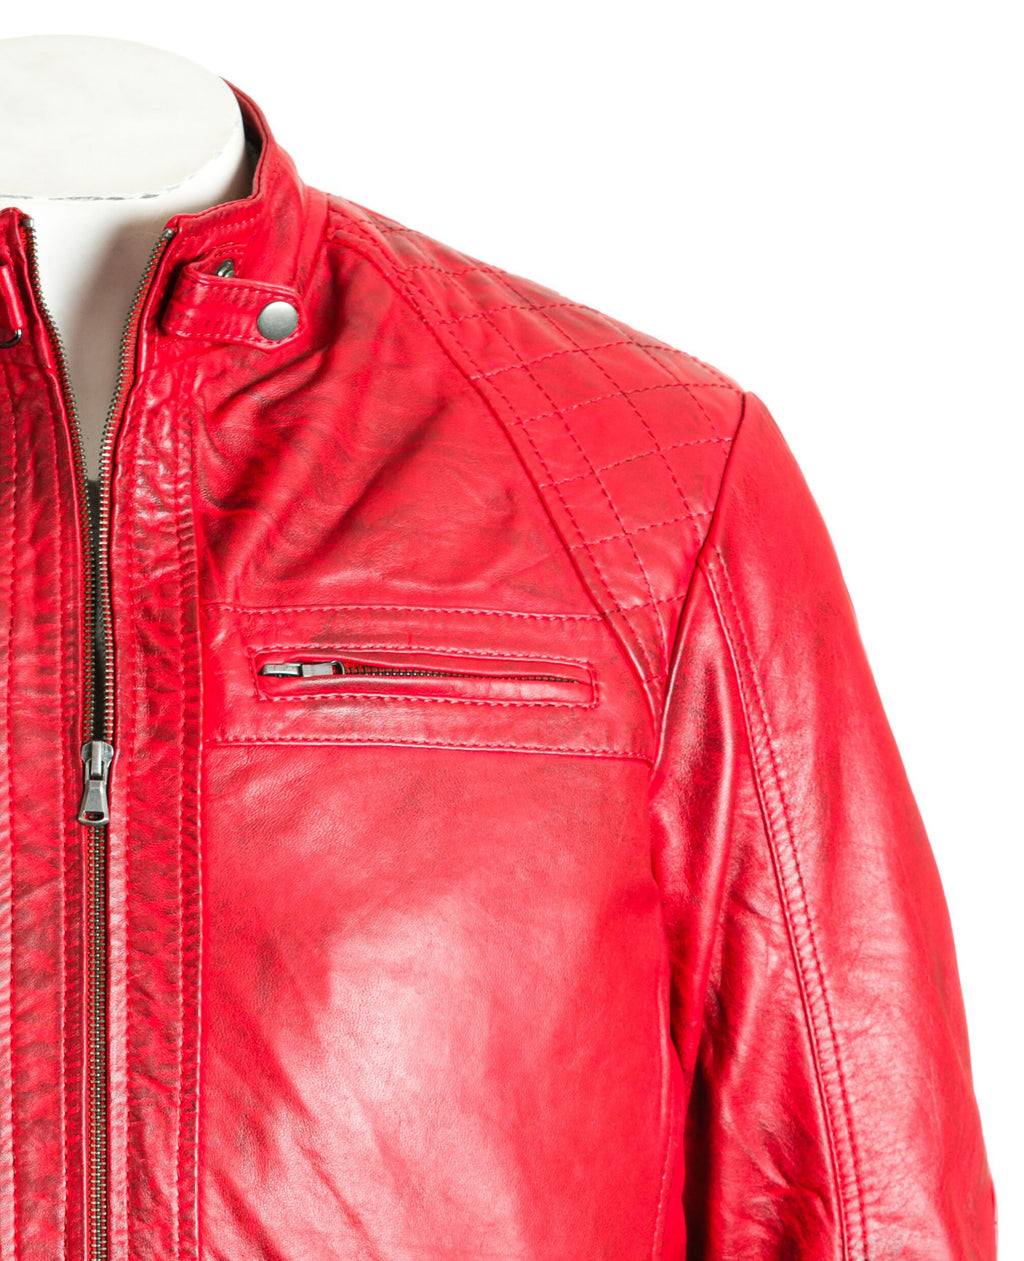 Men's Red Diamond Shoulder Biker Style Leather Jacket: Geronimo